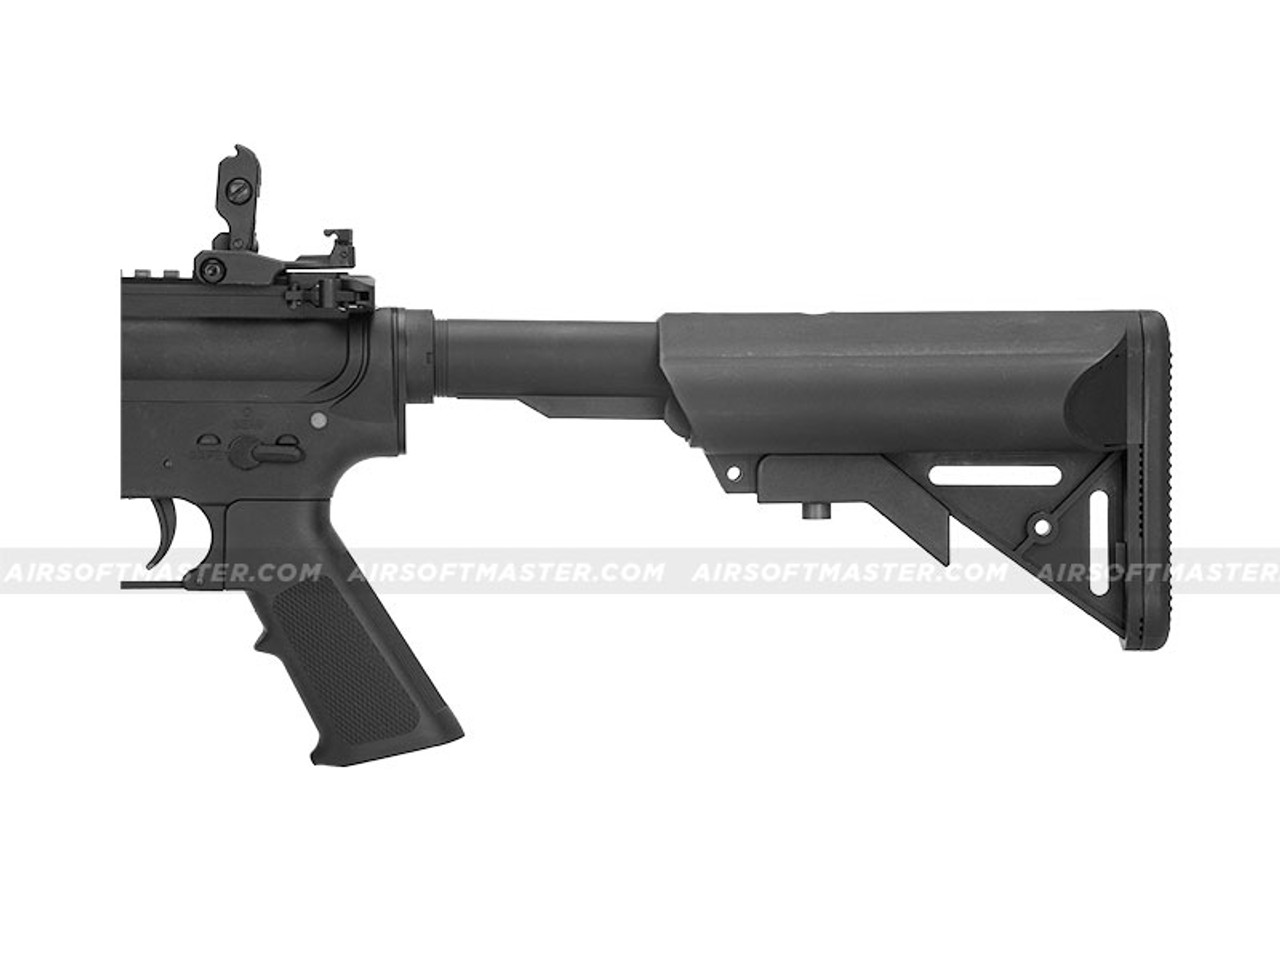 Airsoft submachine gun Lancer Tactical LT-15 M4 Gen2 SD Combo AEG